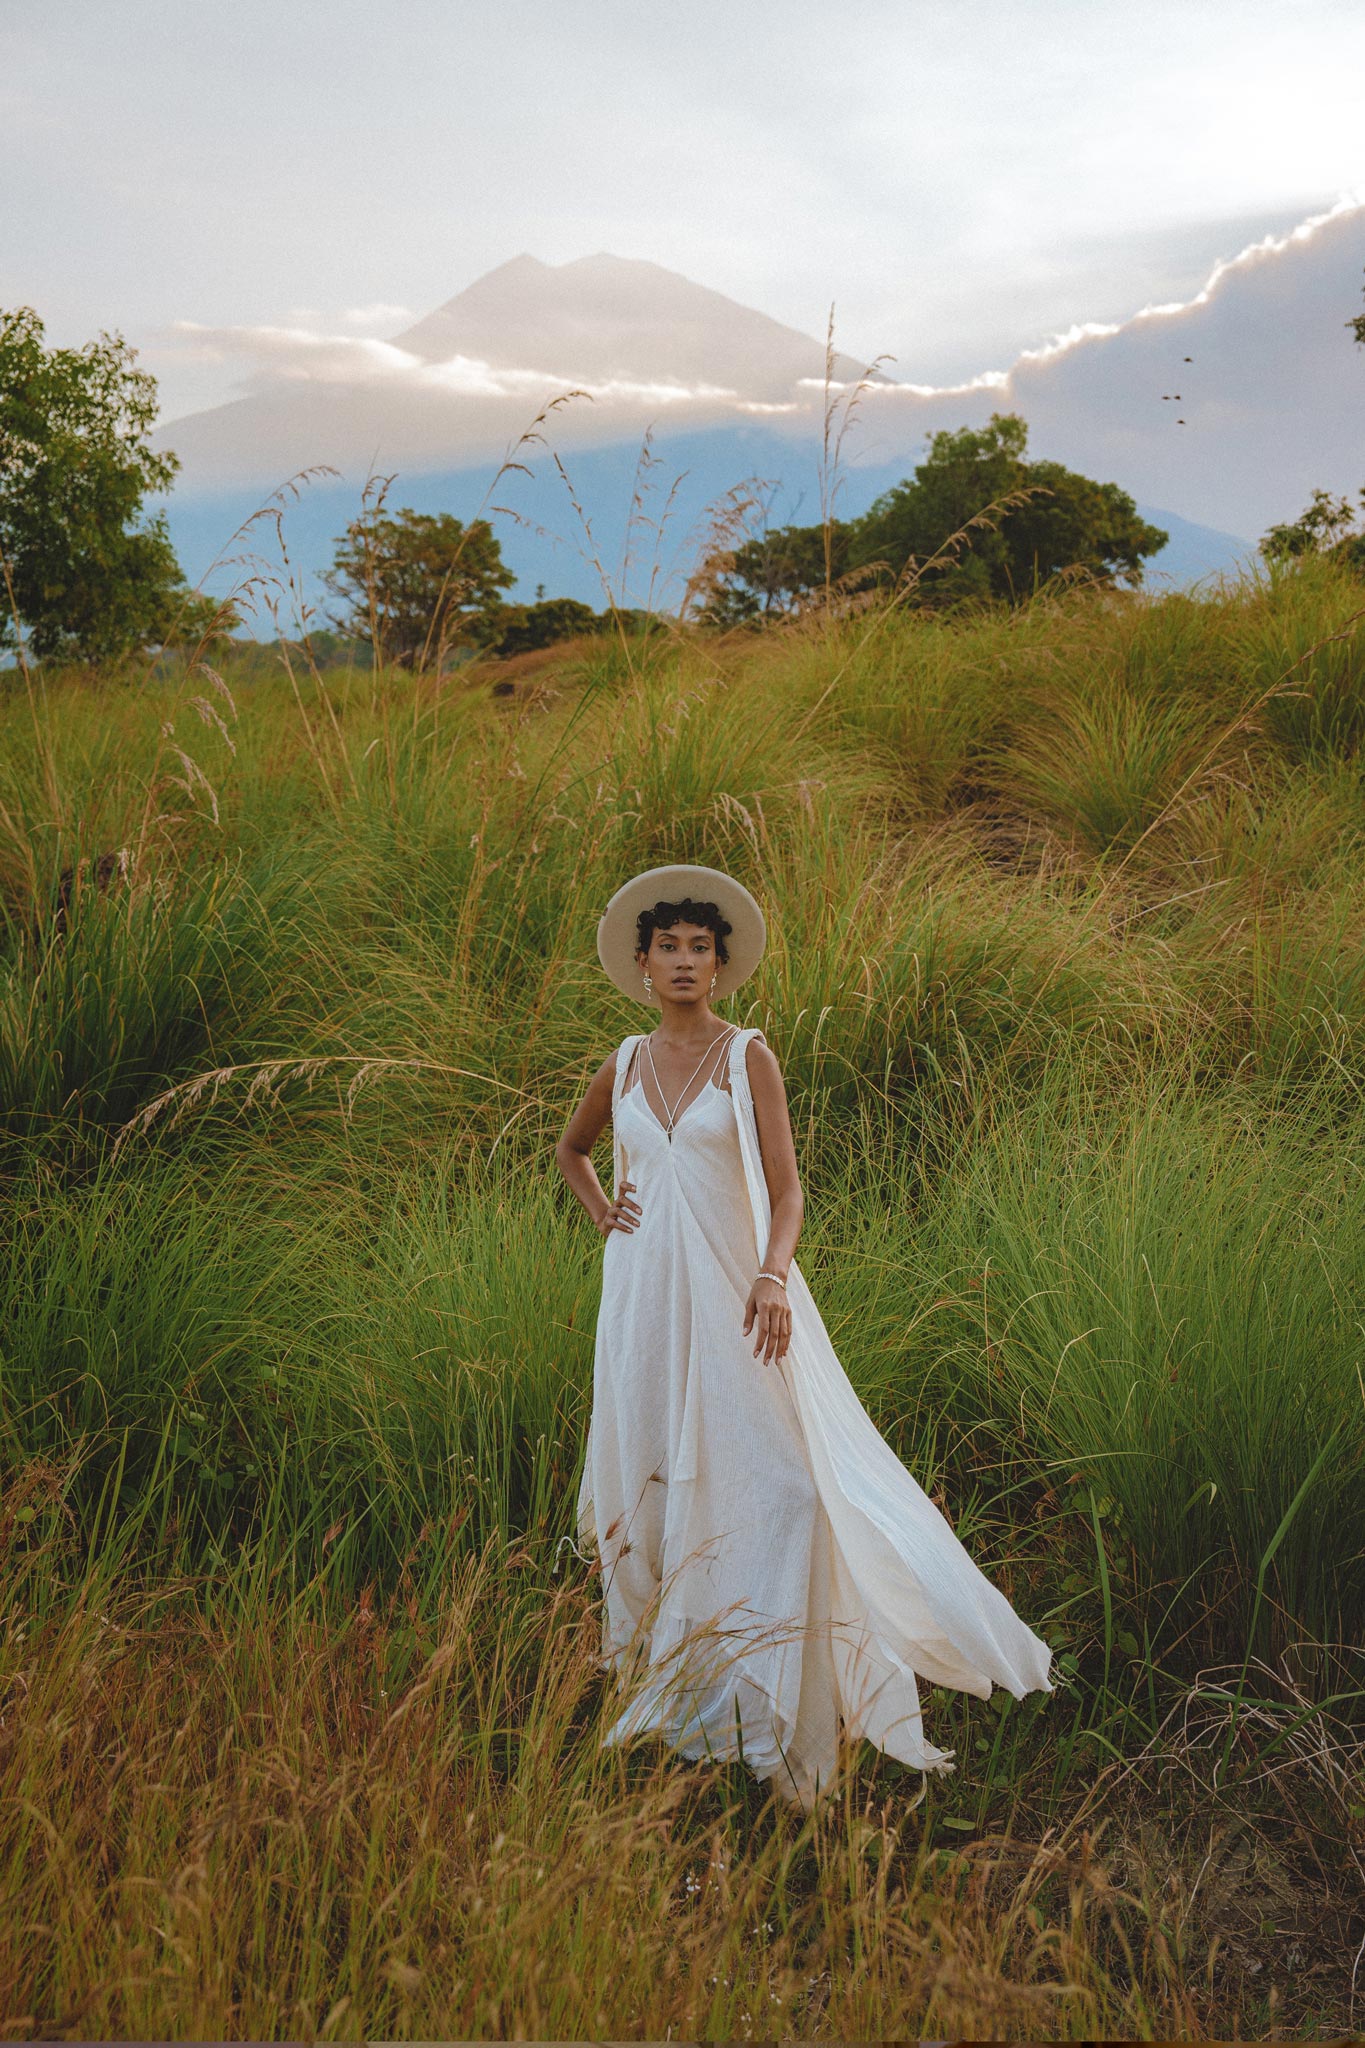 Update your wardrobe with Aya Sacred Wear's Off White Boho Beach Dress.